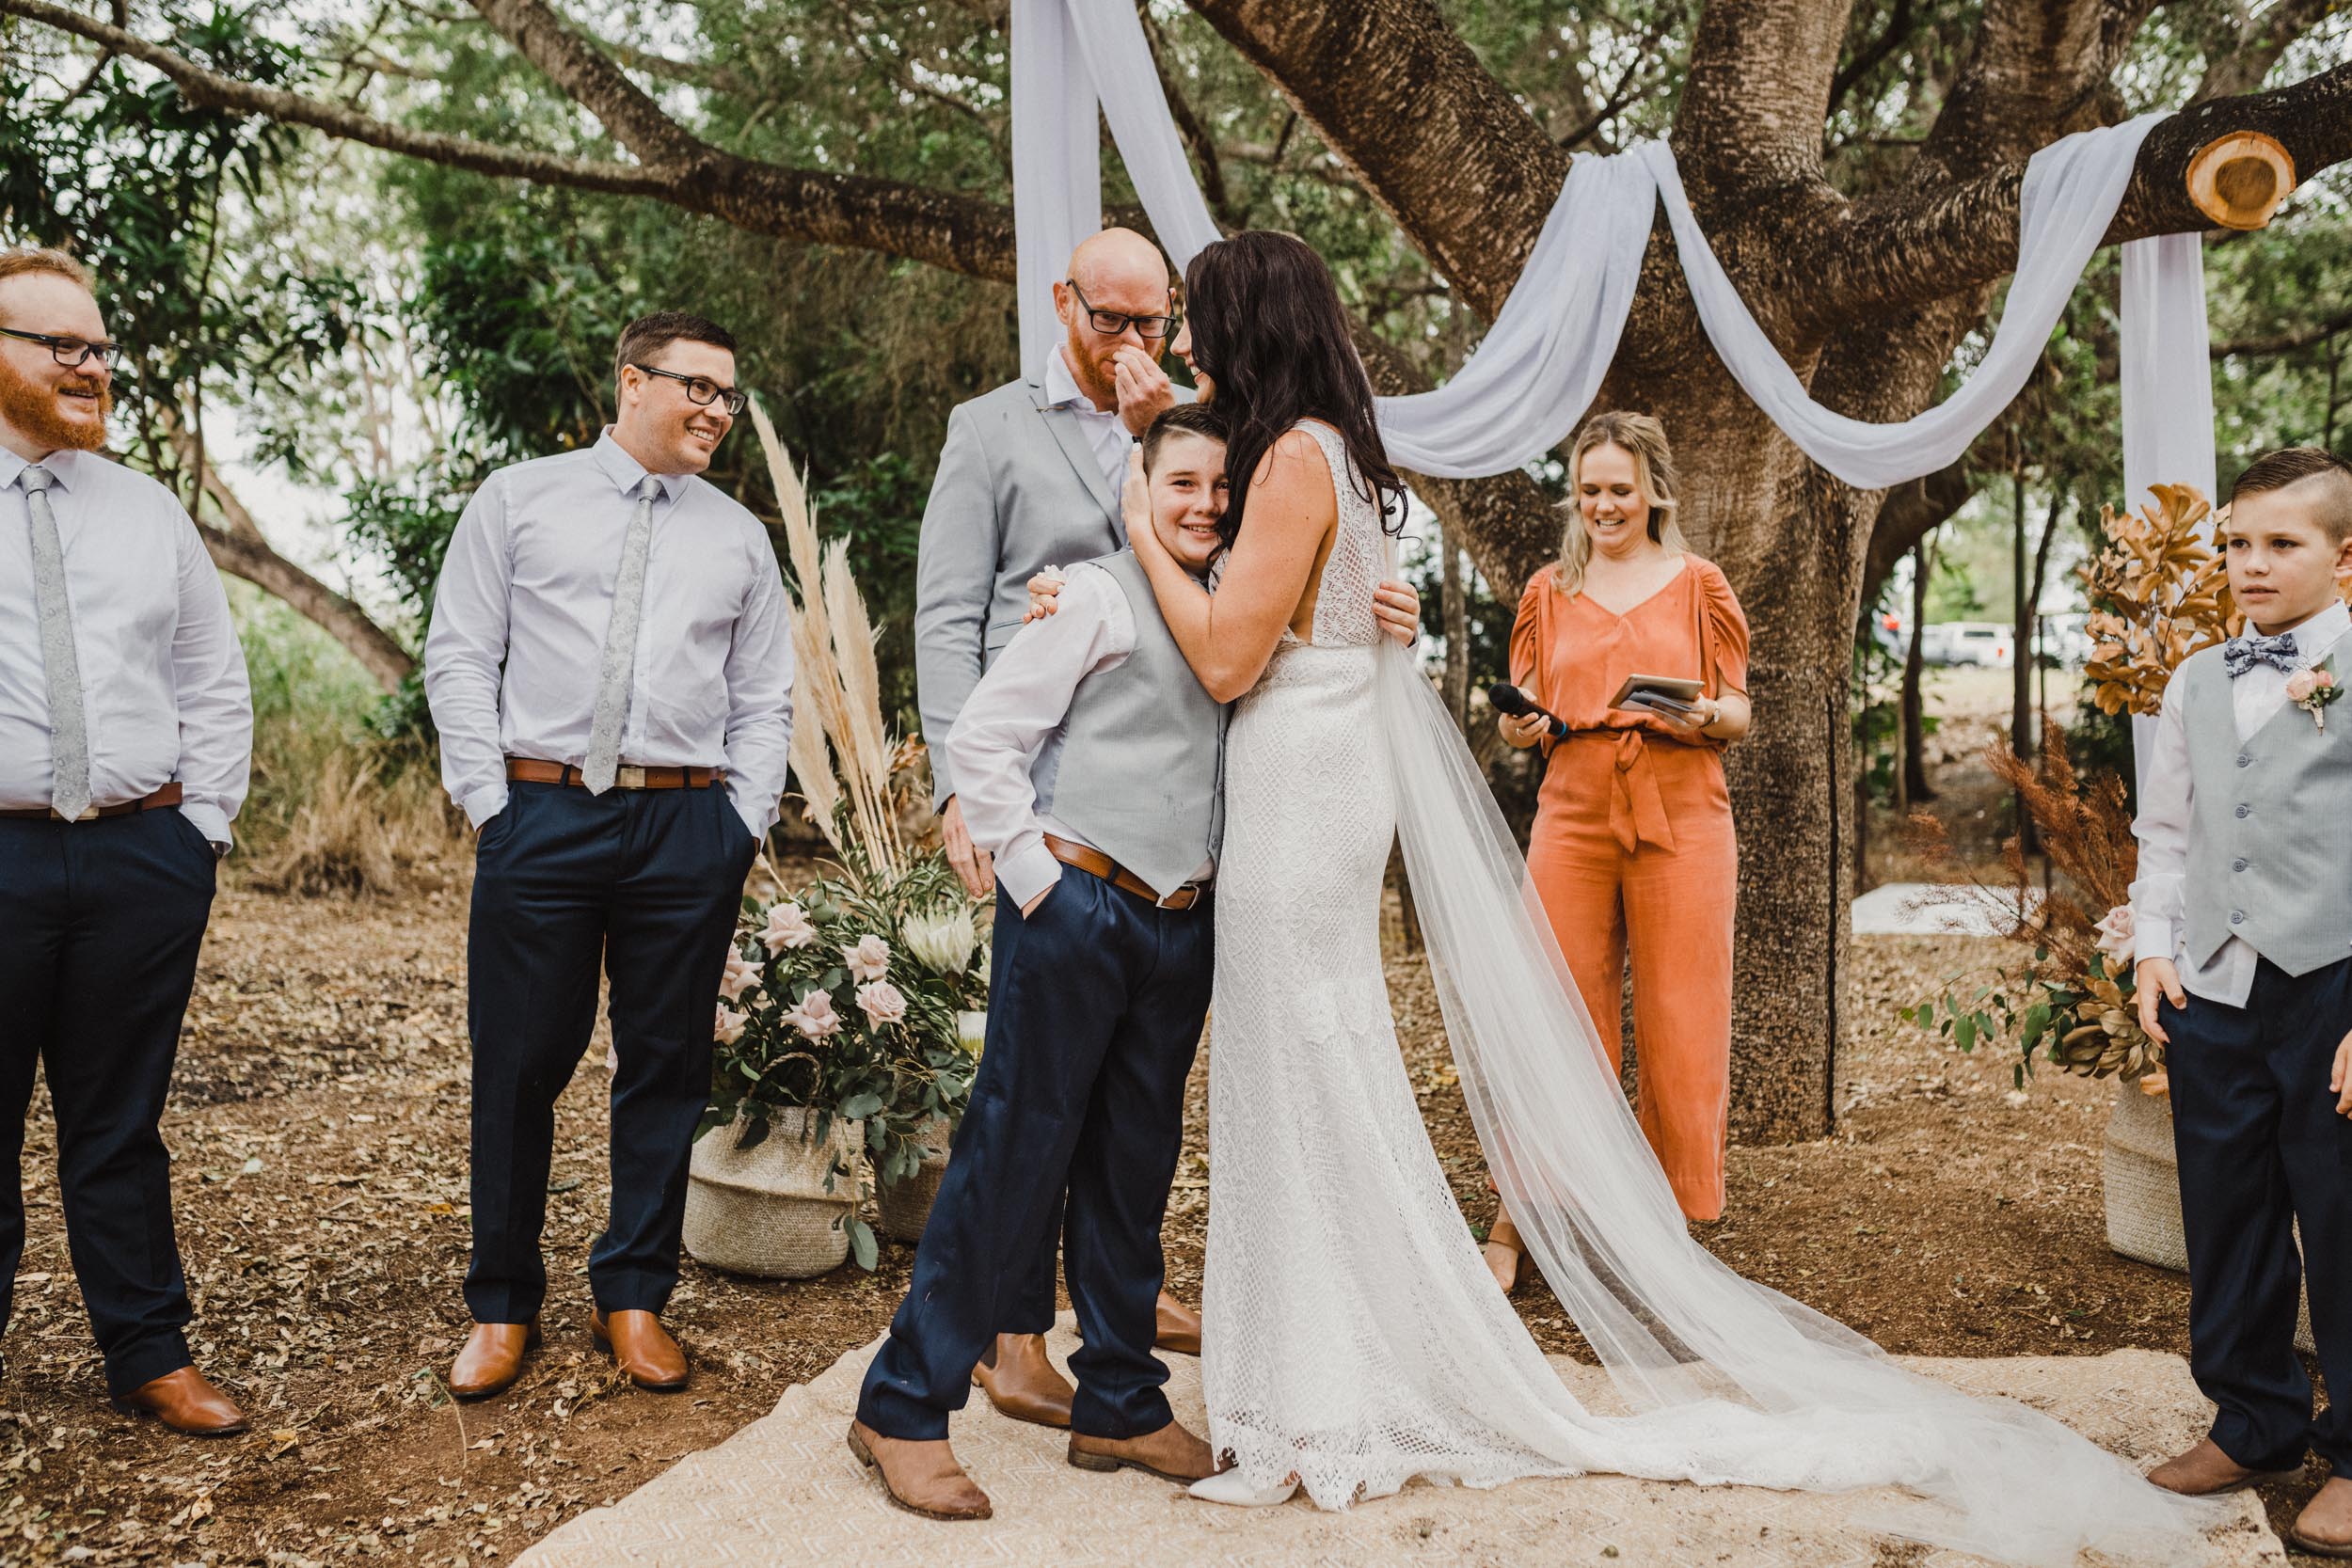 The Raw Photographer - Cairns Wedding Photography - Mareeba Queensland - Australian Outback wedding - Dress Made With Love Bridal - Ceremony Reception Venue Inspiration-34.jpg